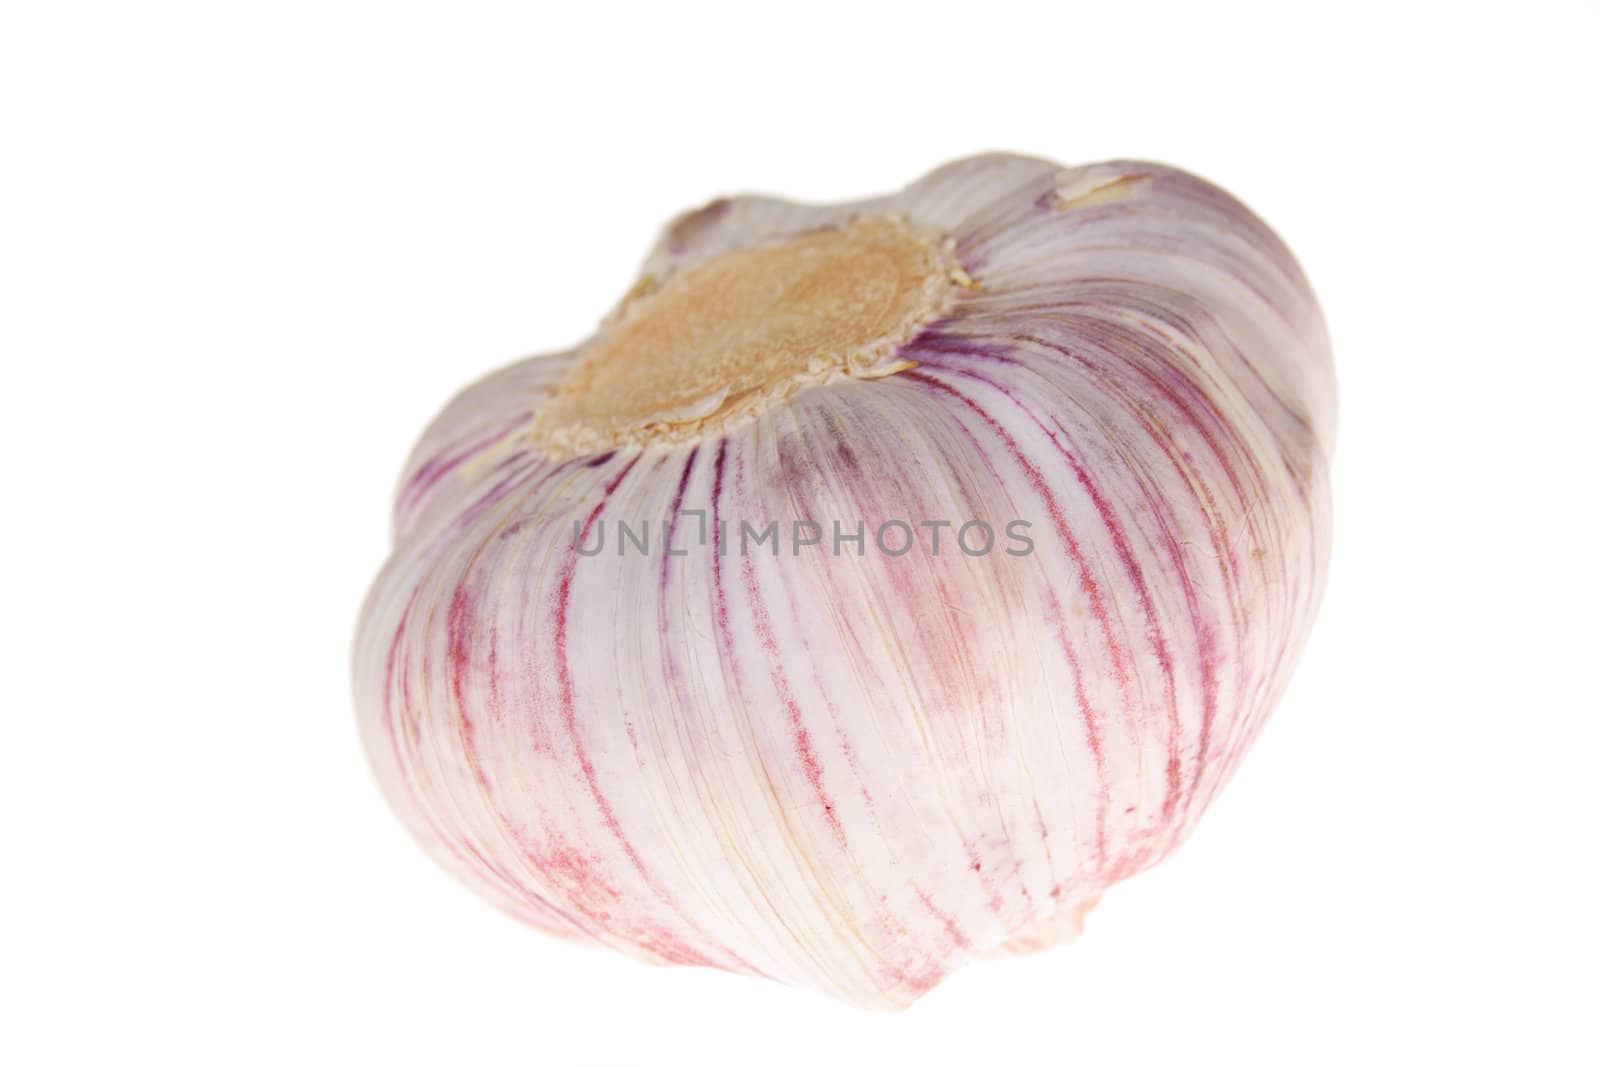 one Garlic photo on the white background